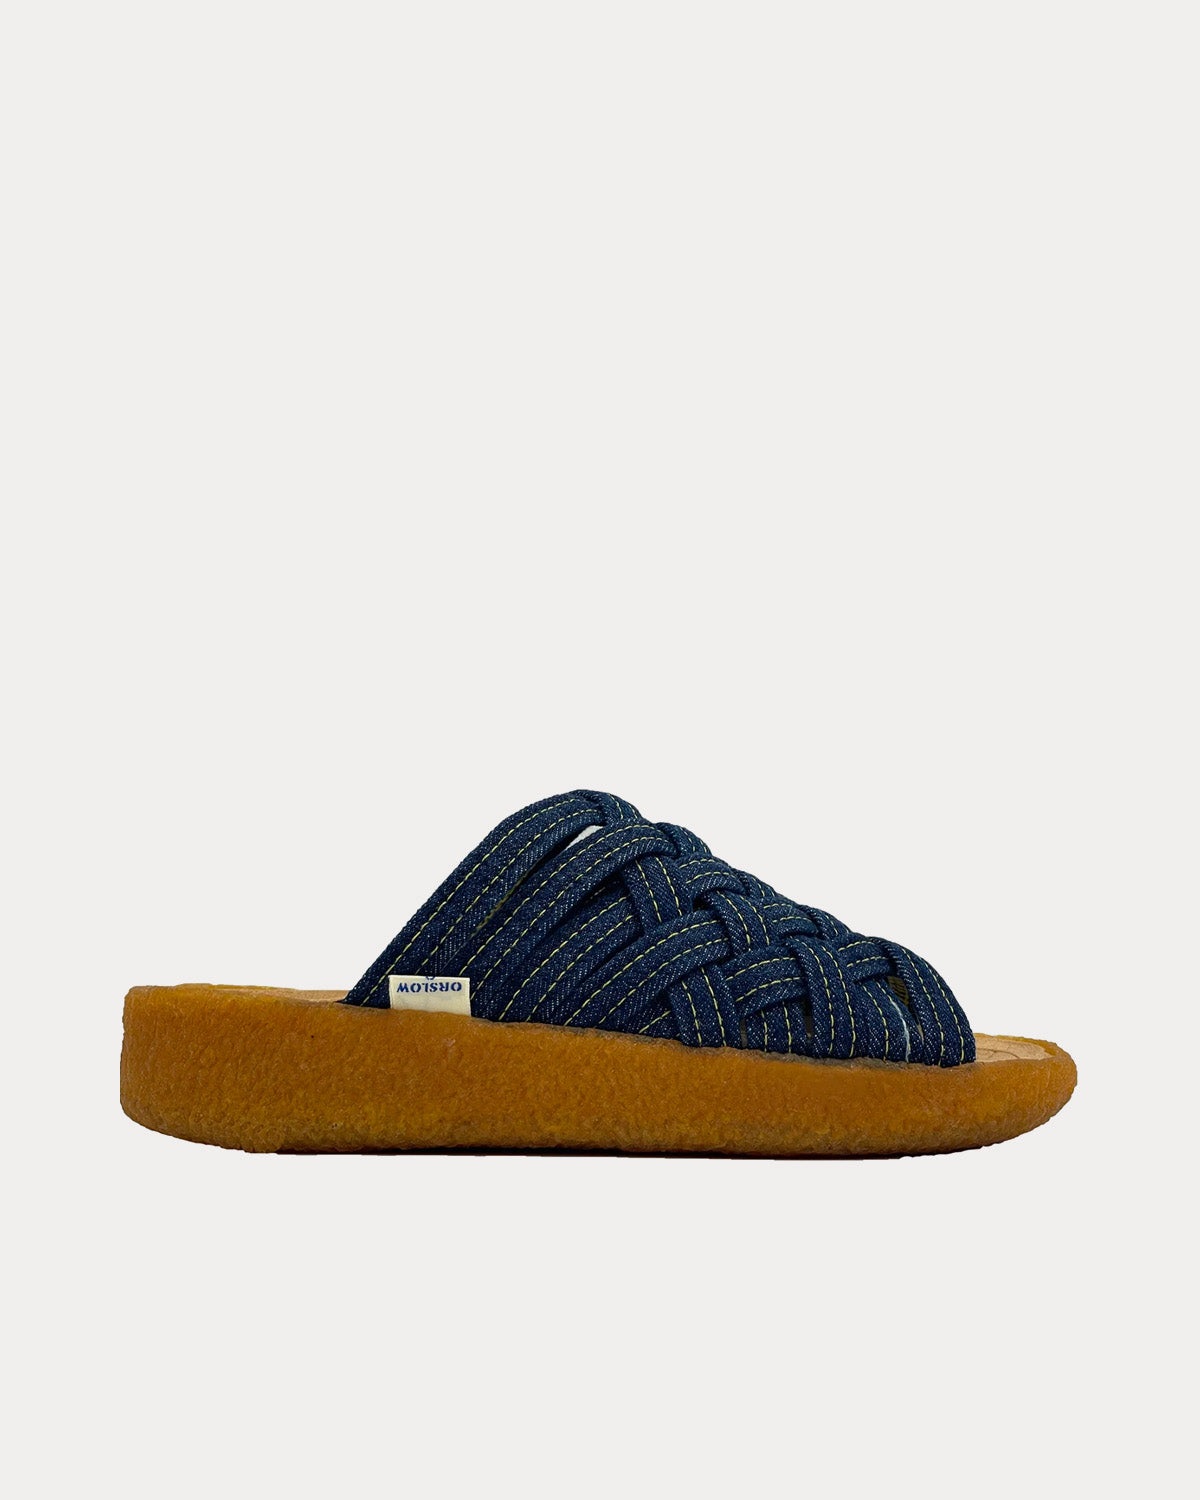 Malibu Sandals x orSlow - Zuma Indigo Blue Denim Sandals